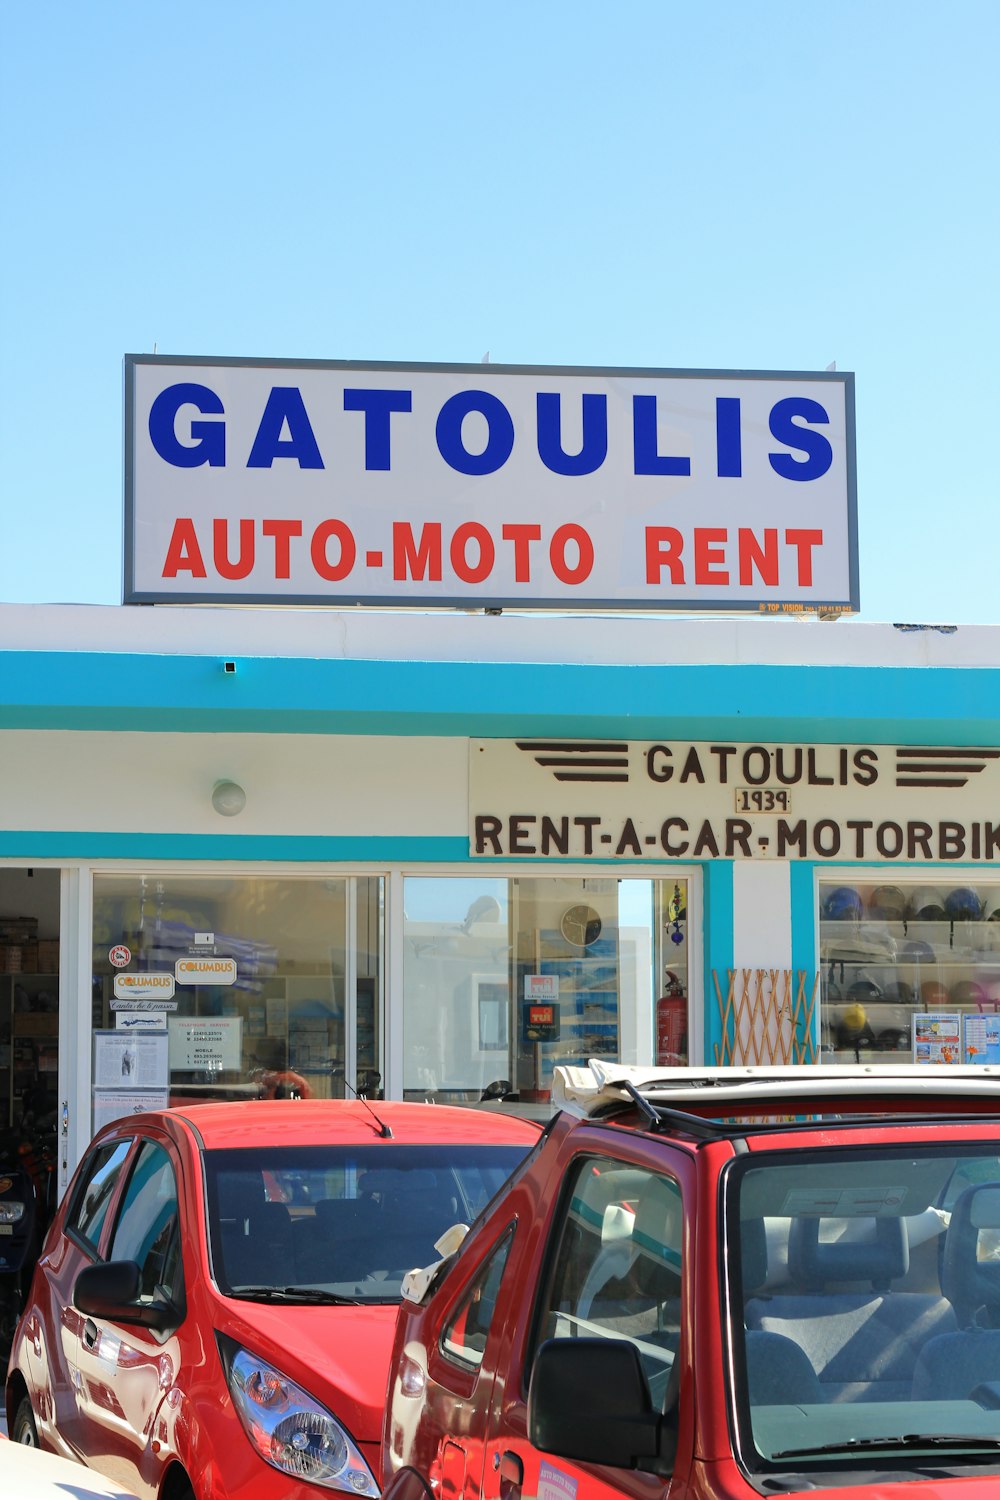 Gatoulis auto moto rent signage